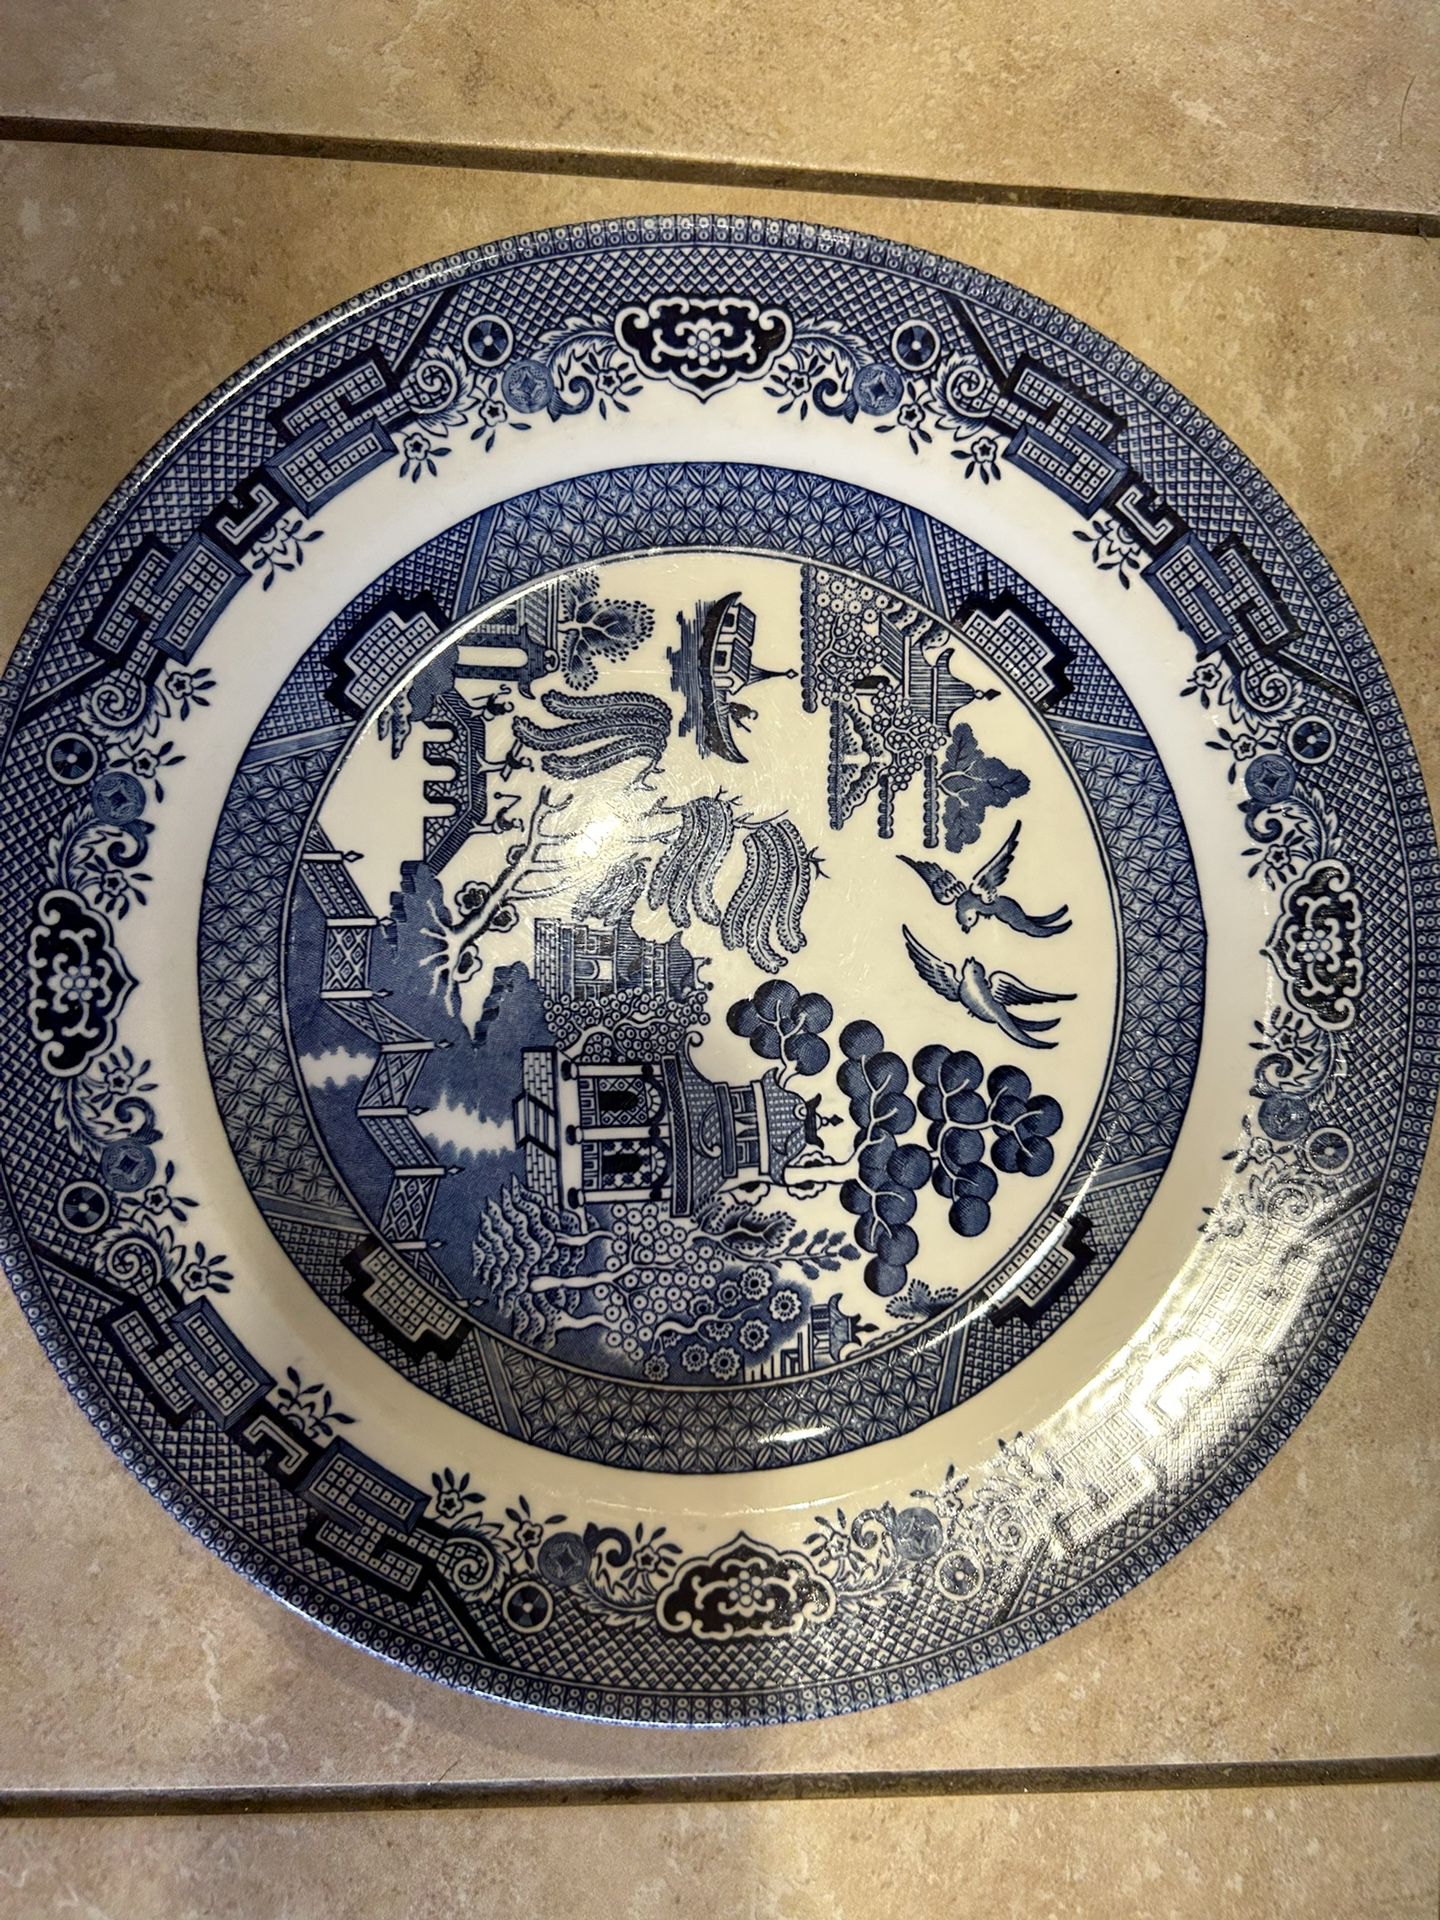 Churchill China (England) Dinner Plates